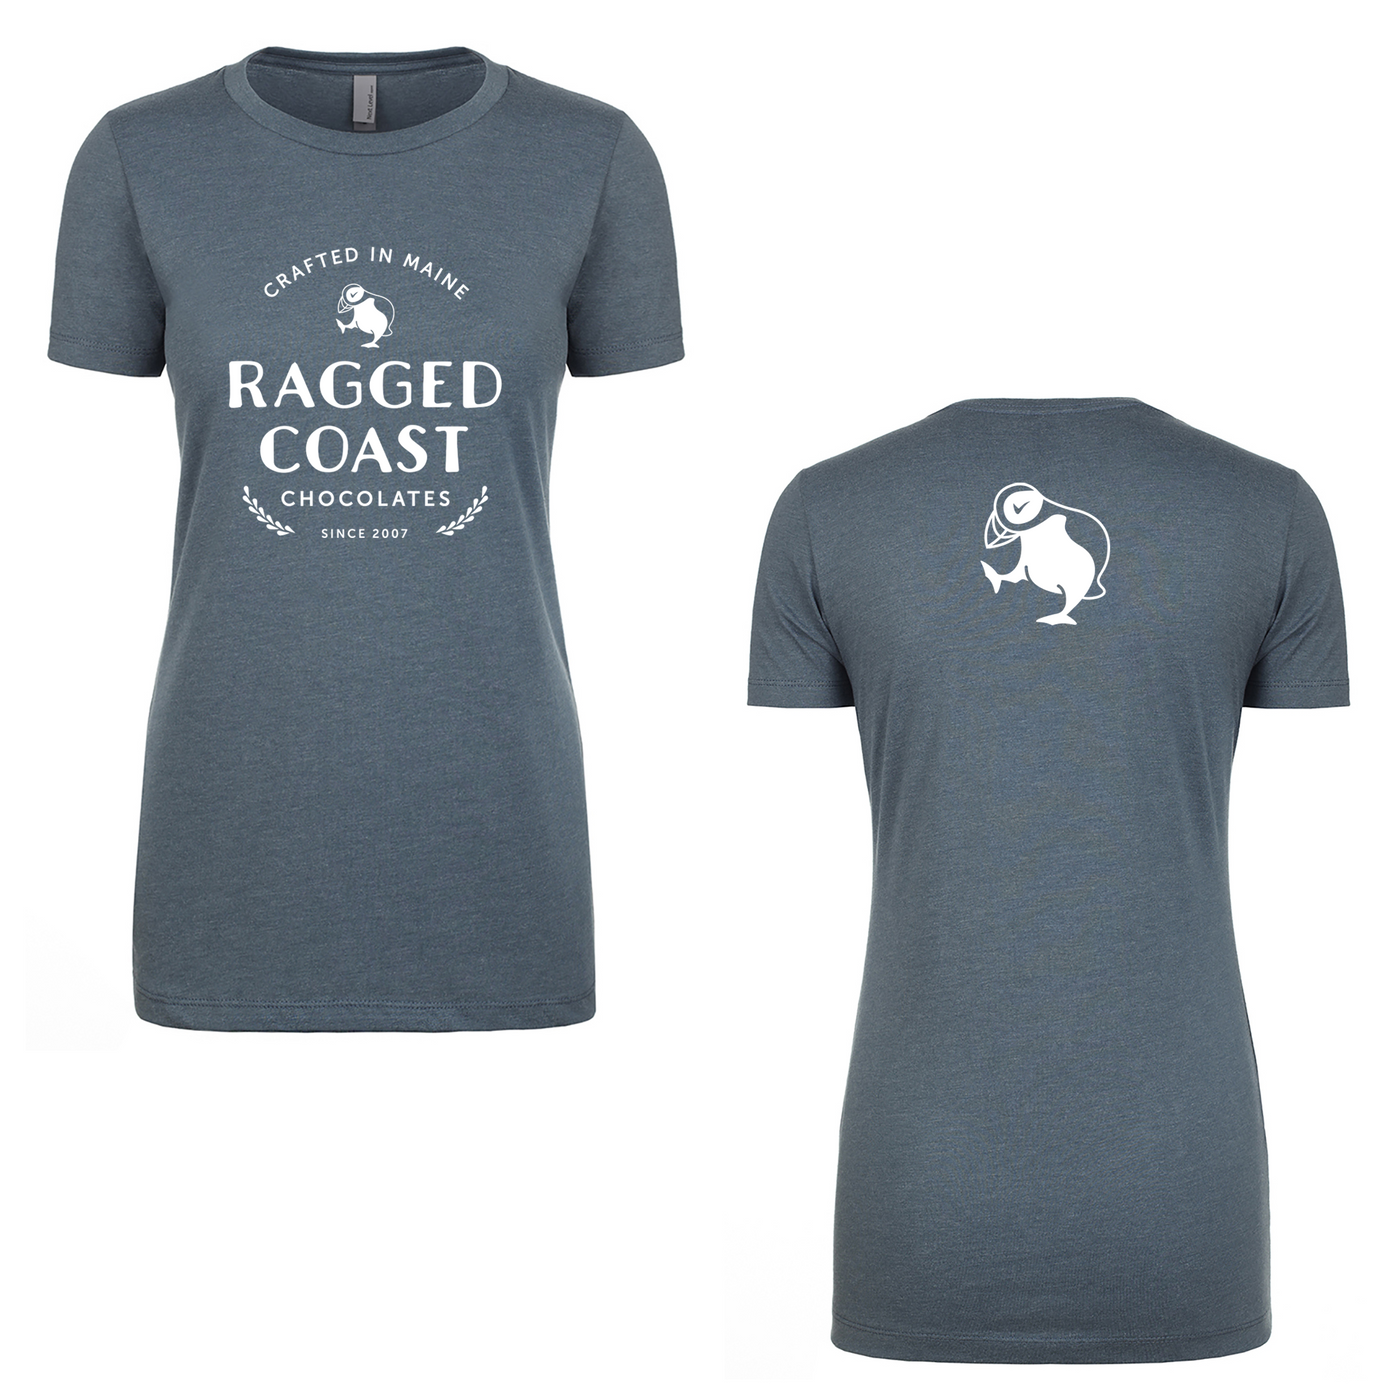 Ragged Coast Women's T